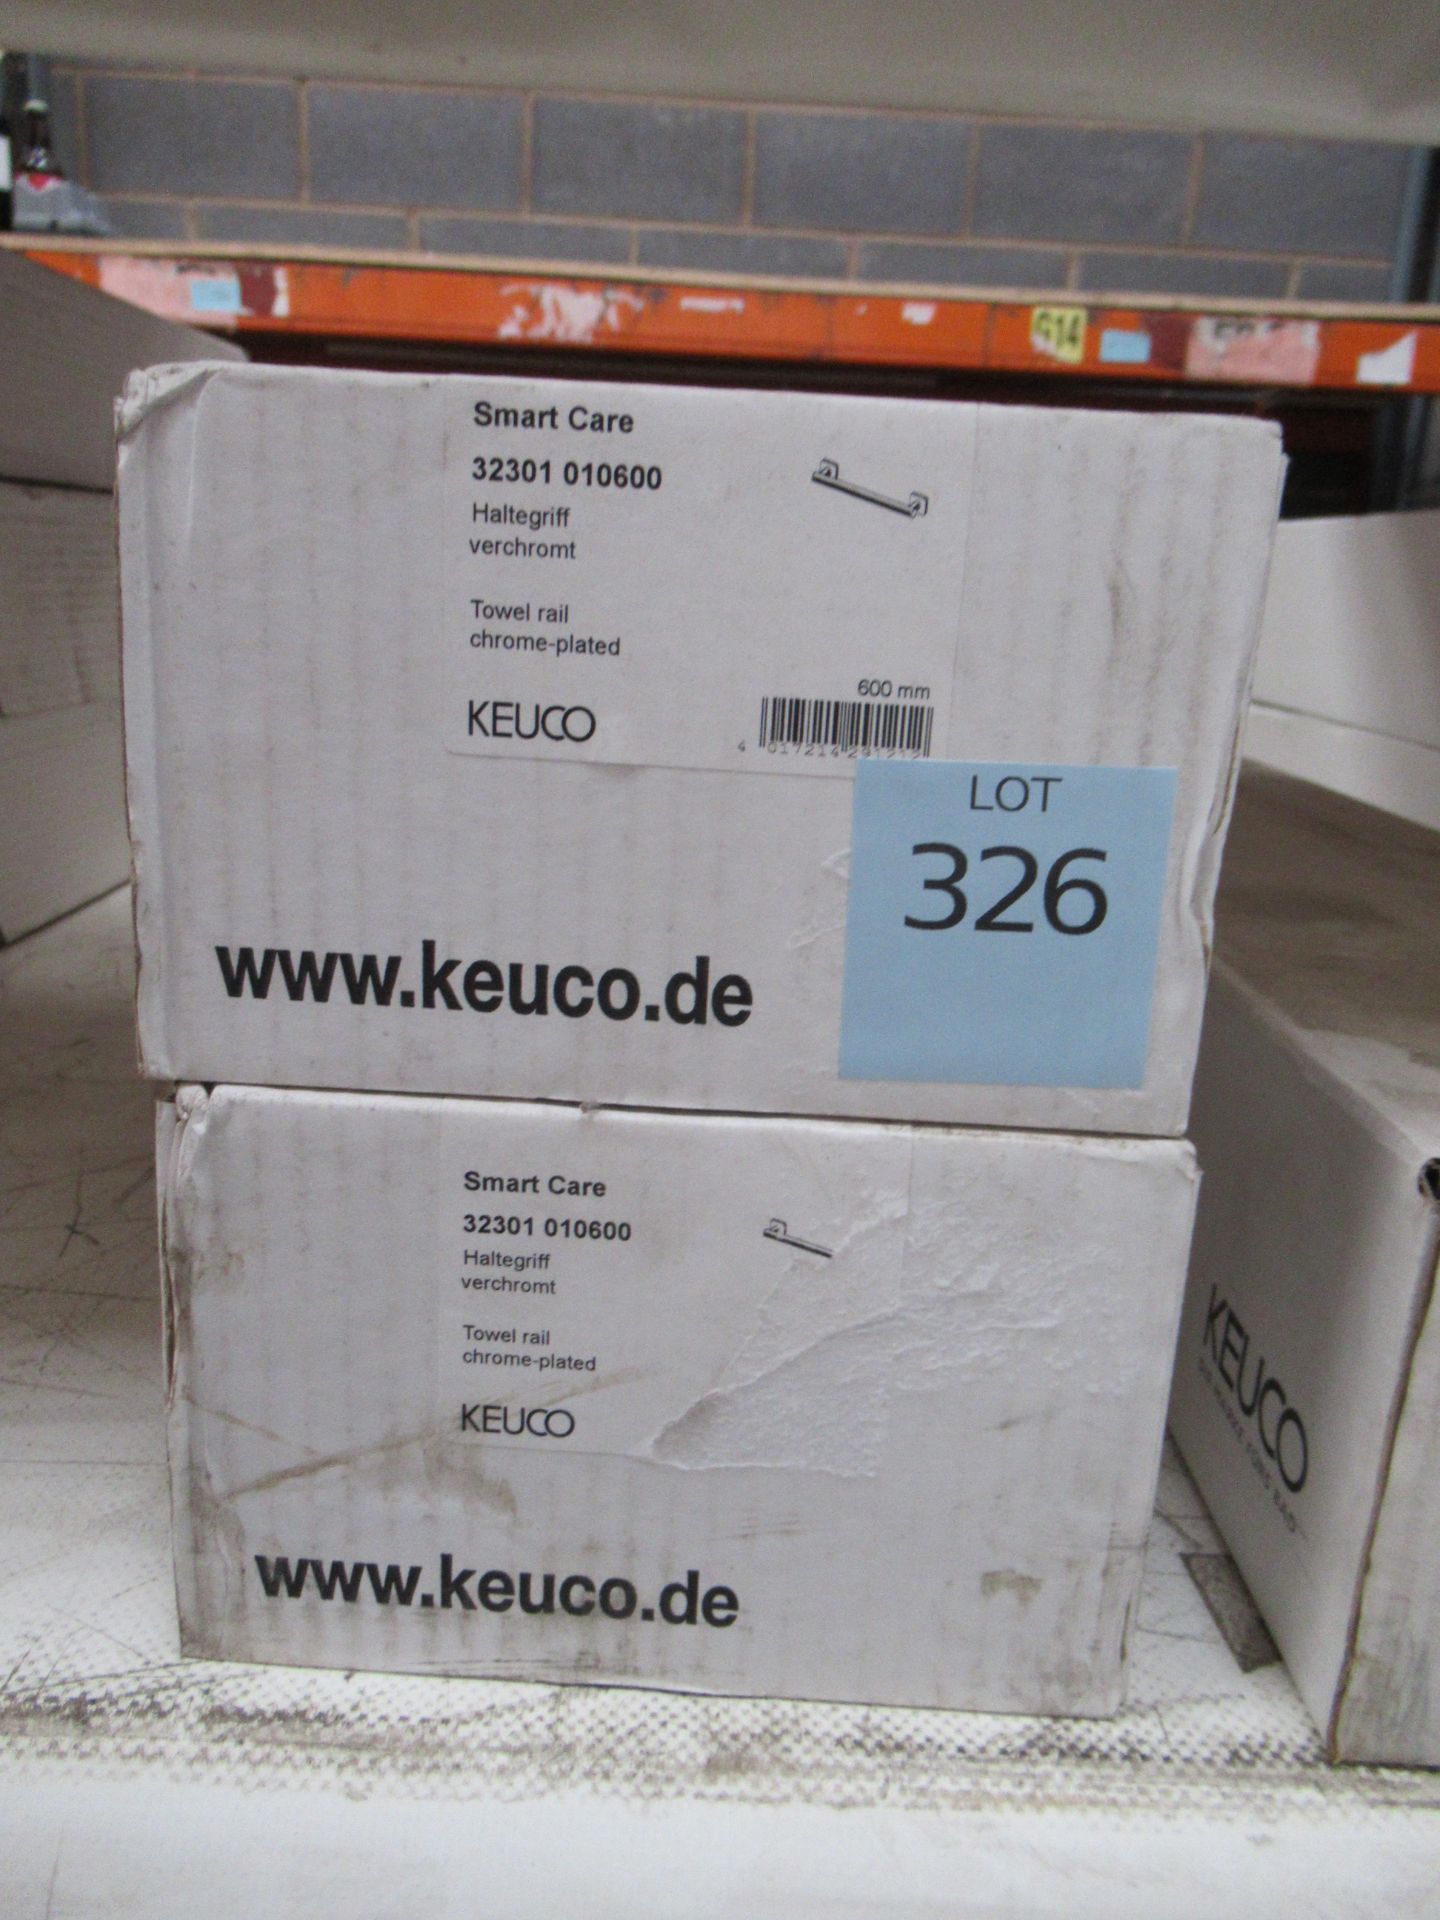 2 x Keuco Smart Care Towel Rails, Chrome Plated, P/N 32301-010600